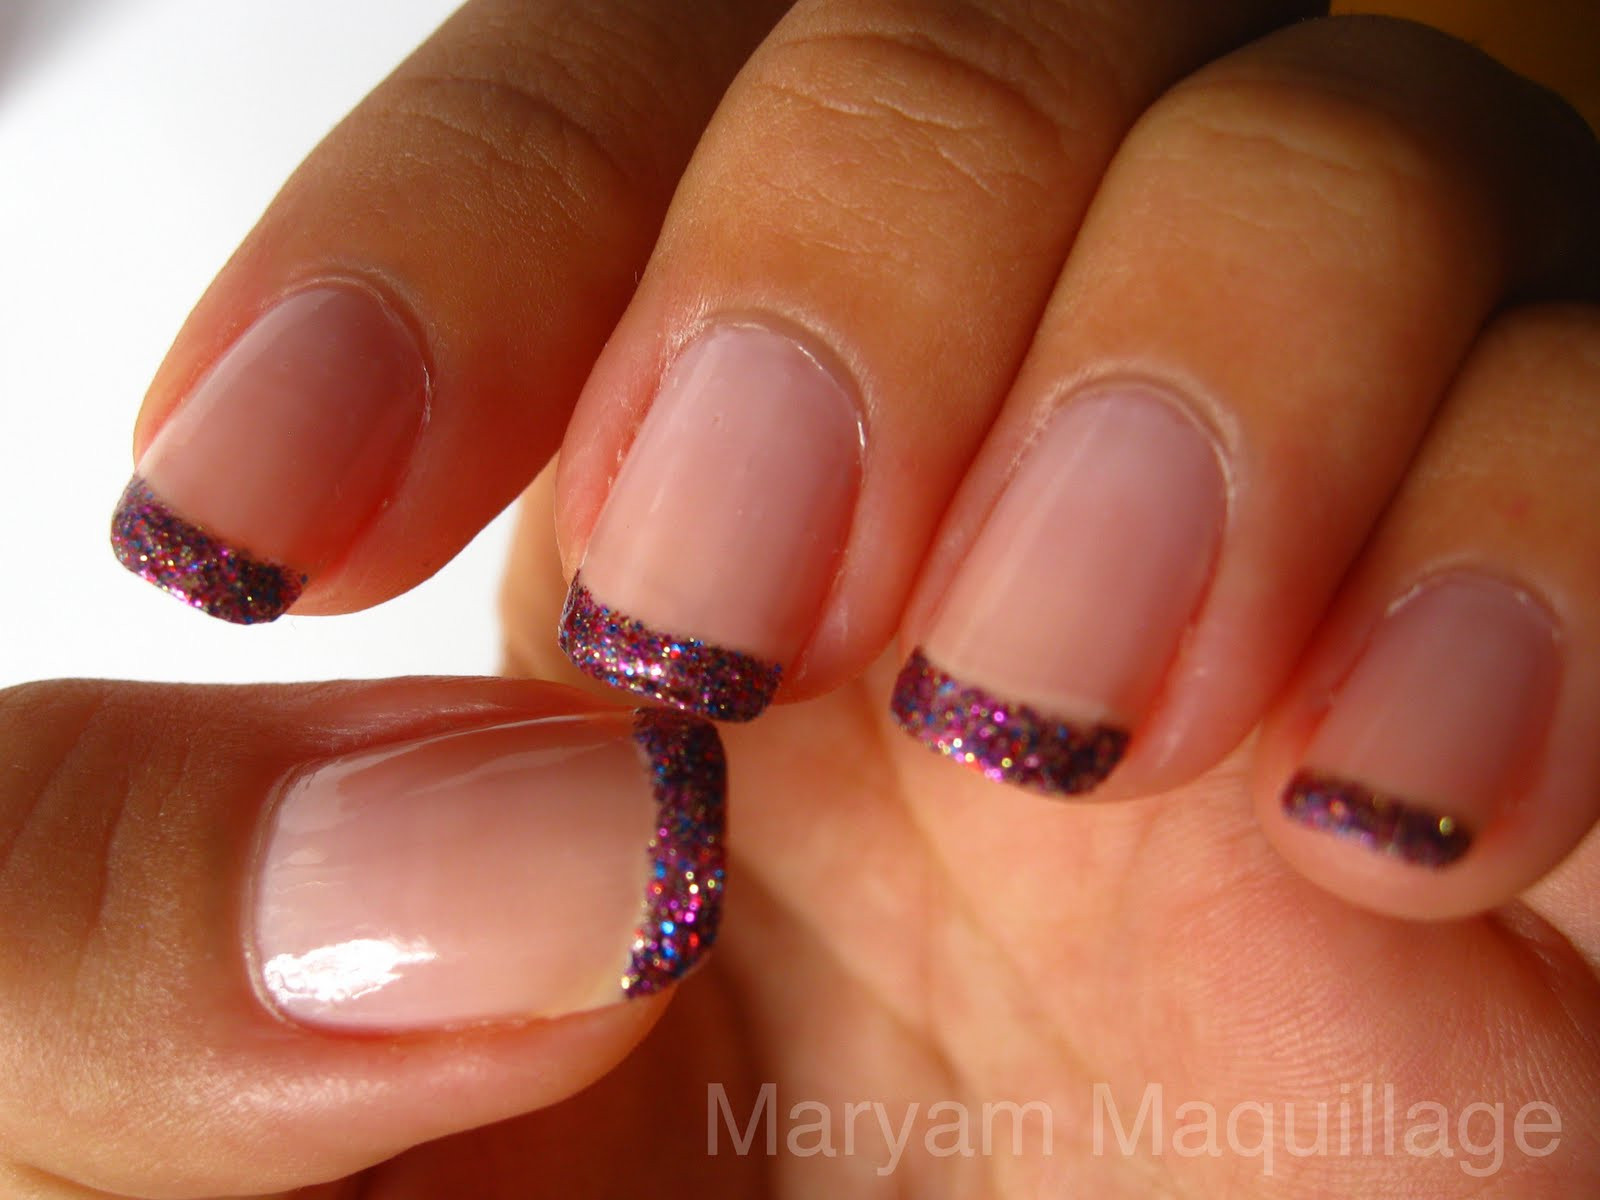 Black Nails With Glitter Tips
 Maryam Maquillage Rockstar Pink Nail Tips